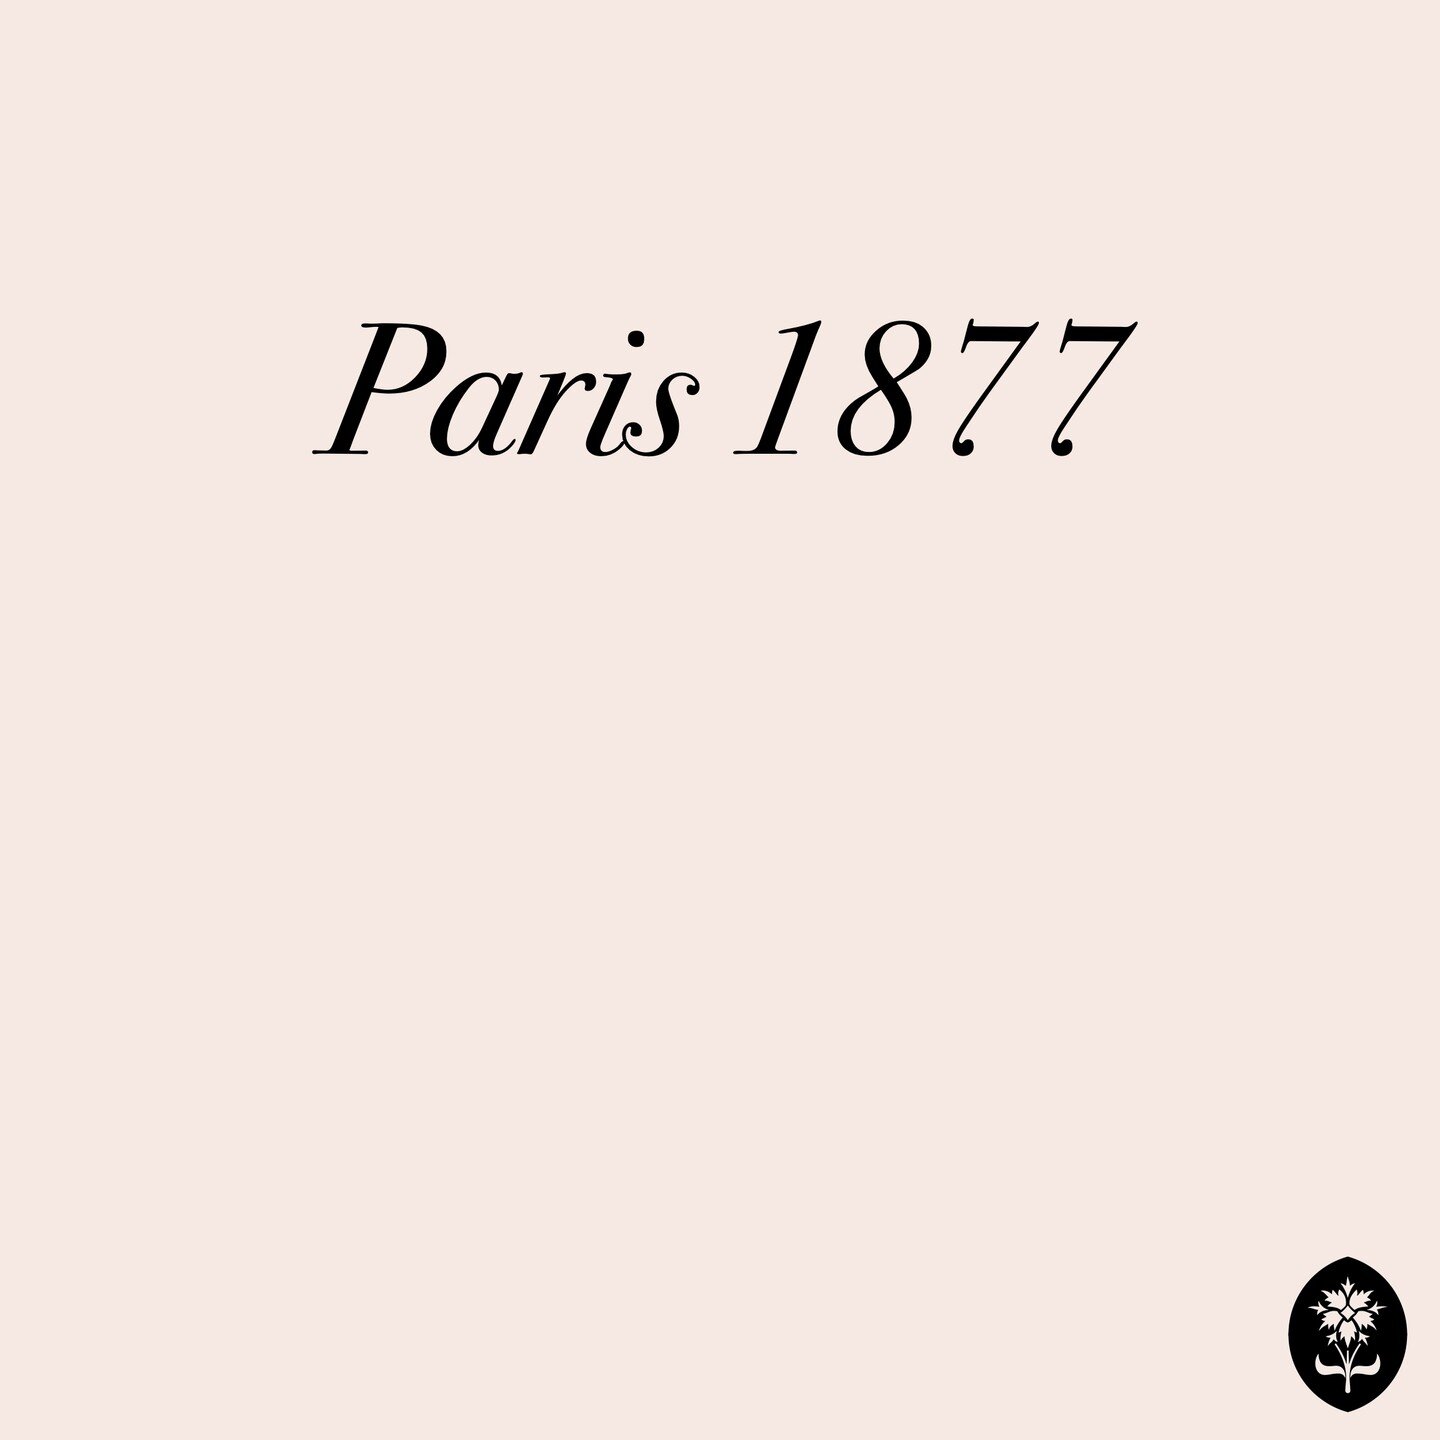 El patrimonio.
El futuro tiene sus raíces en la historia.

#heritage #heritagebrand #longhistory #marquehistorique #strongvalues #timeless #skincare #luxurycosmetics #madeinfrance #frenchluxury #trueluxury #since1877 #1877 #paris #🇫🇷